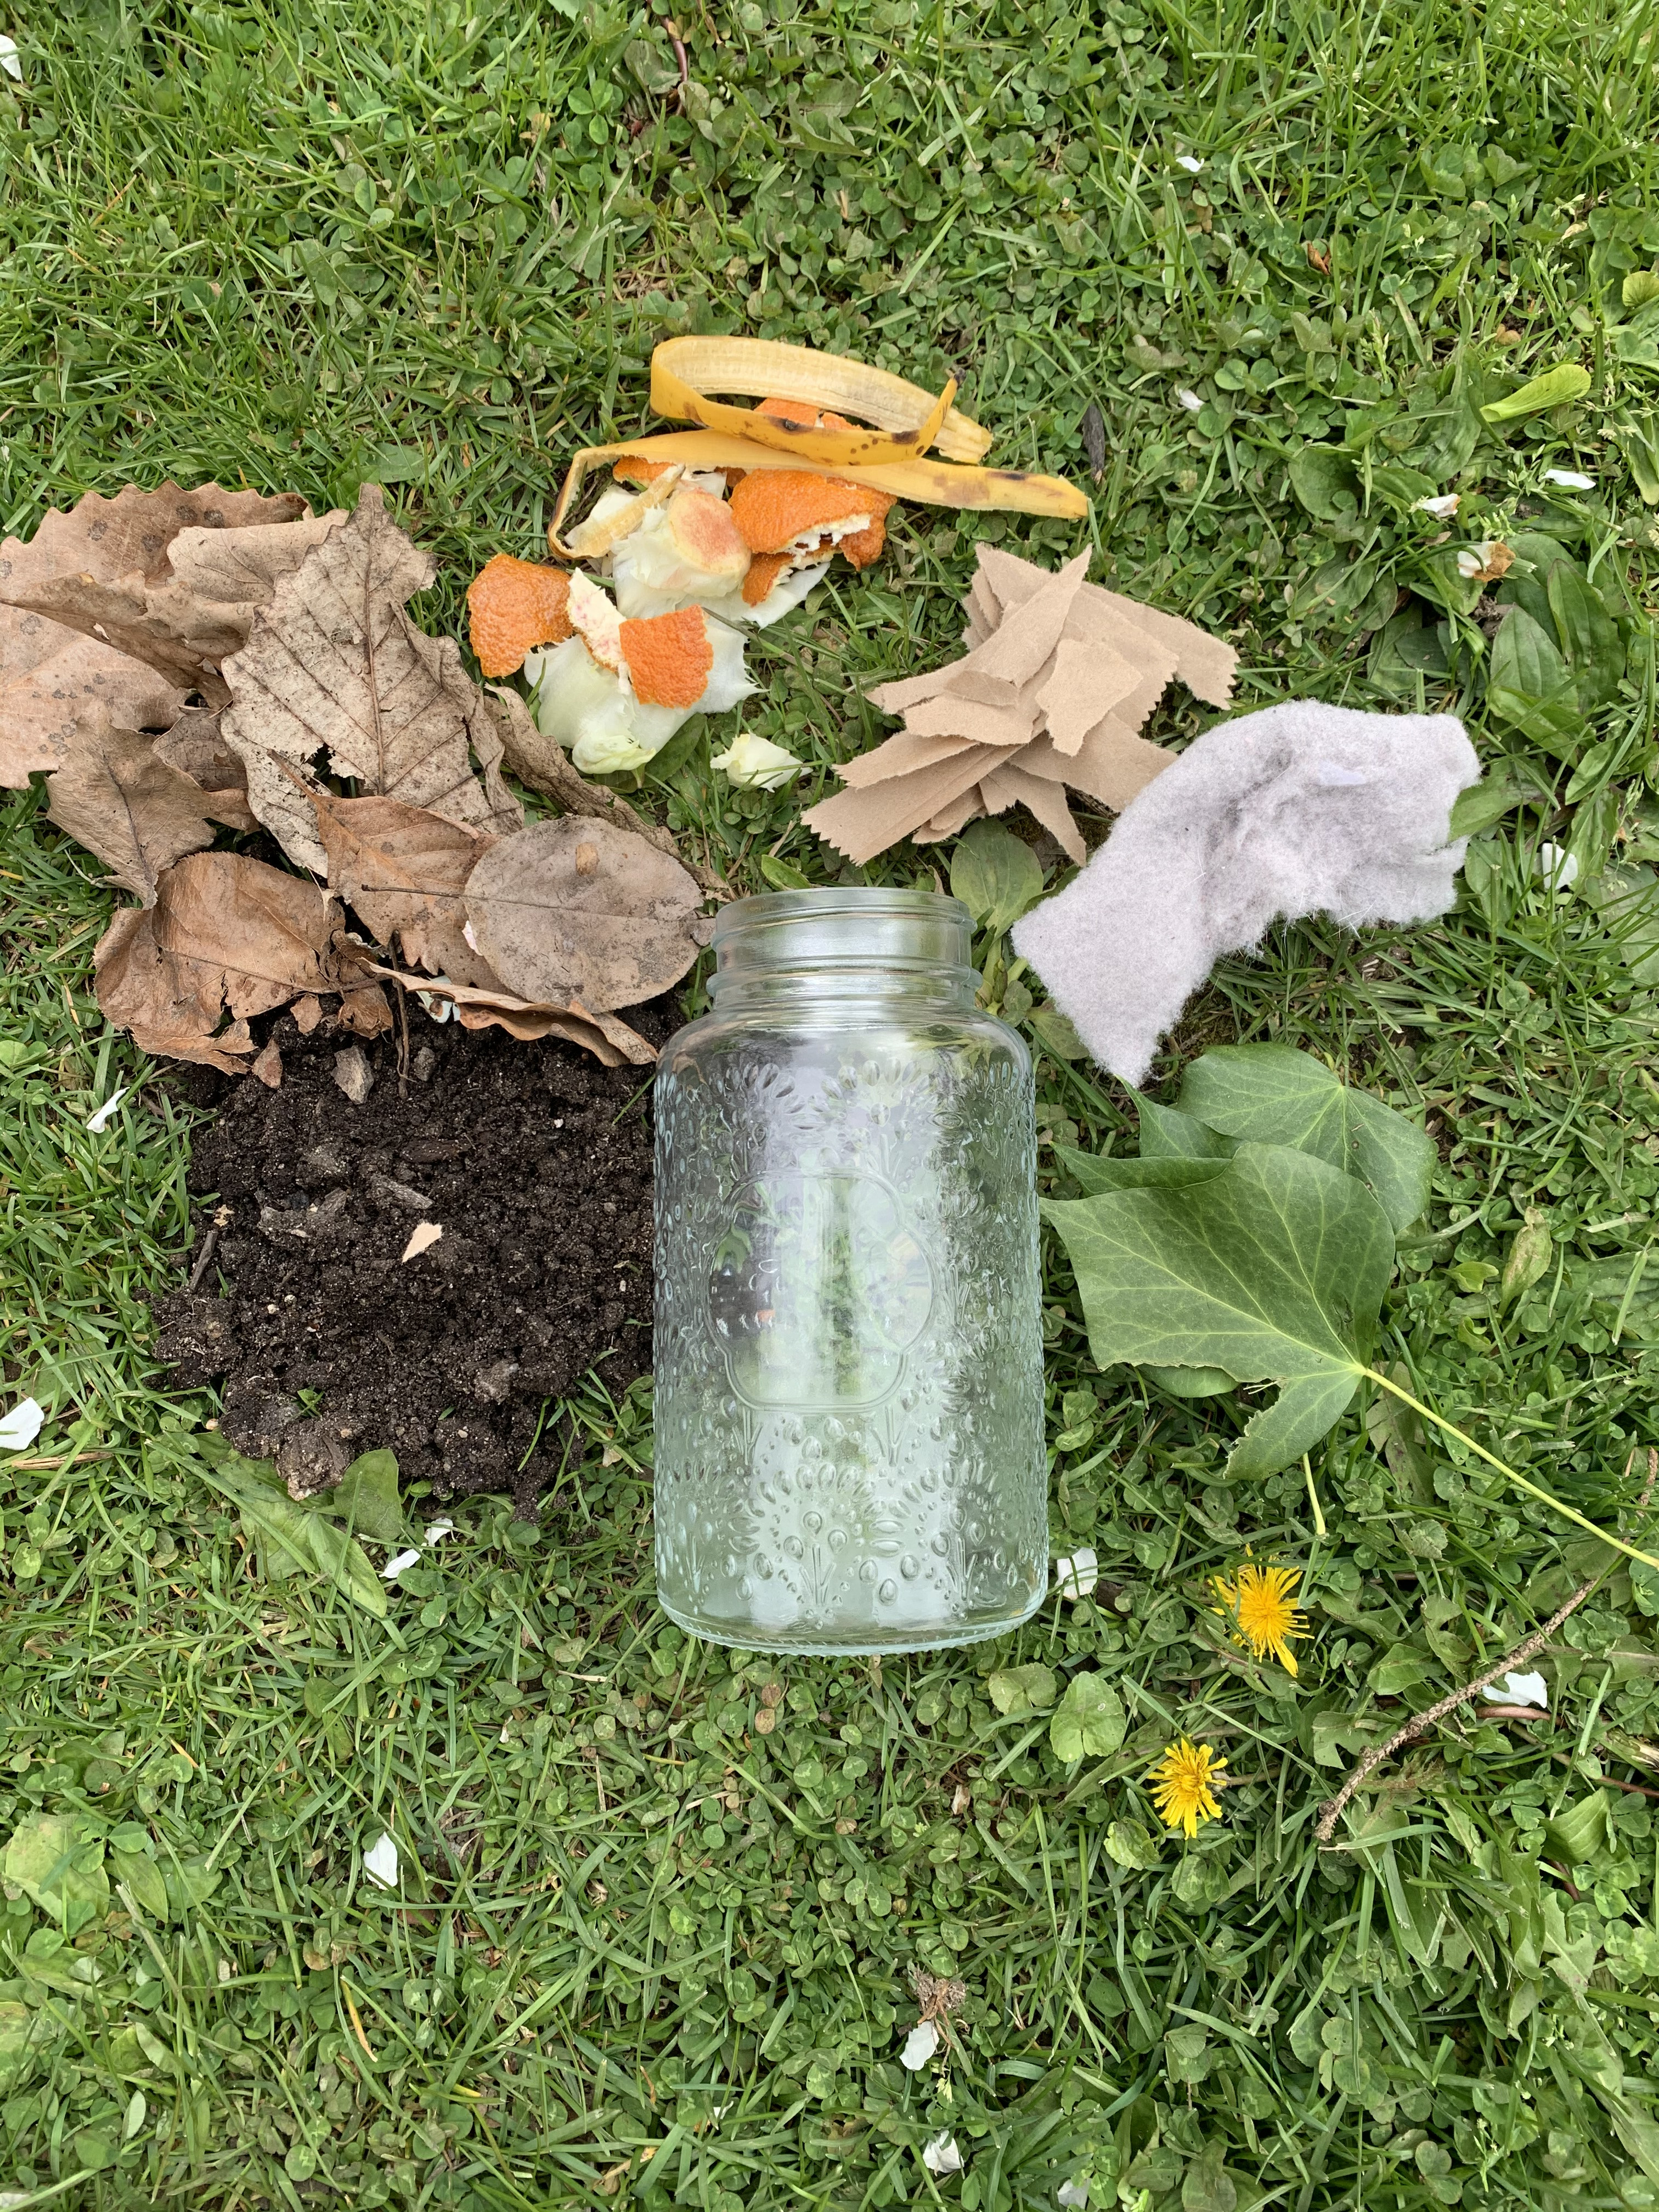 soil layers in a jar